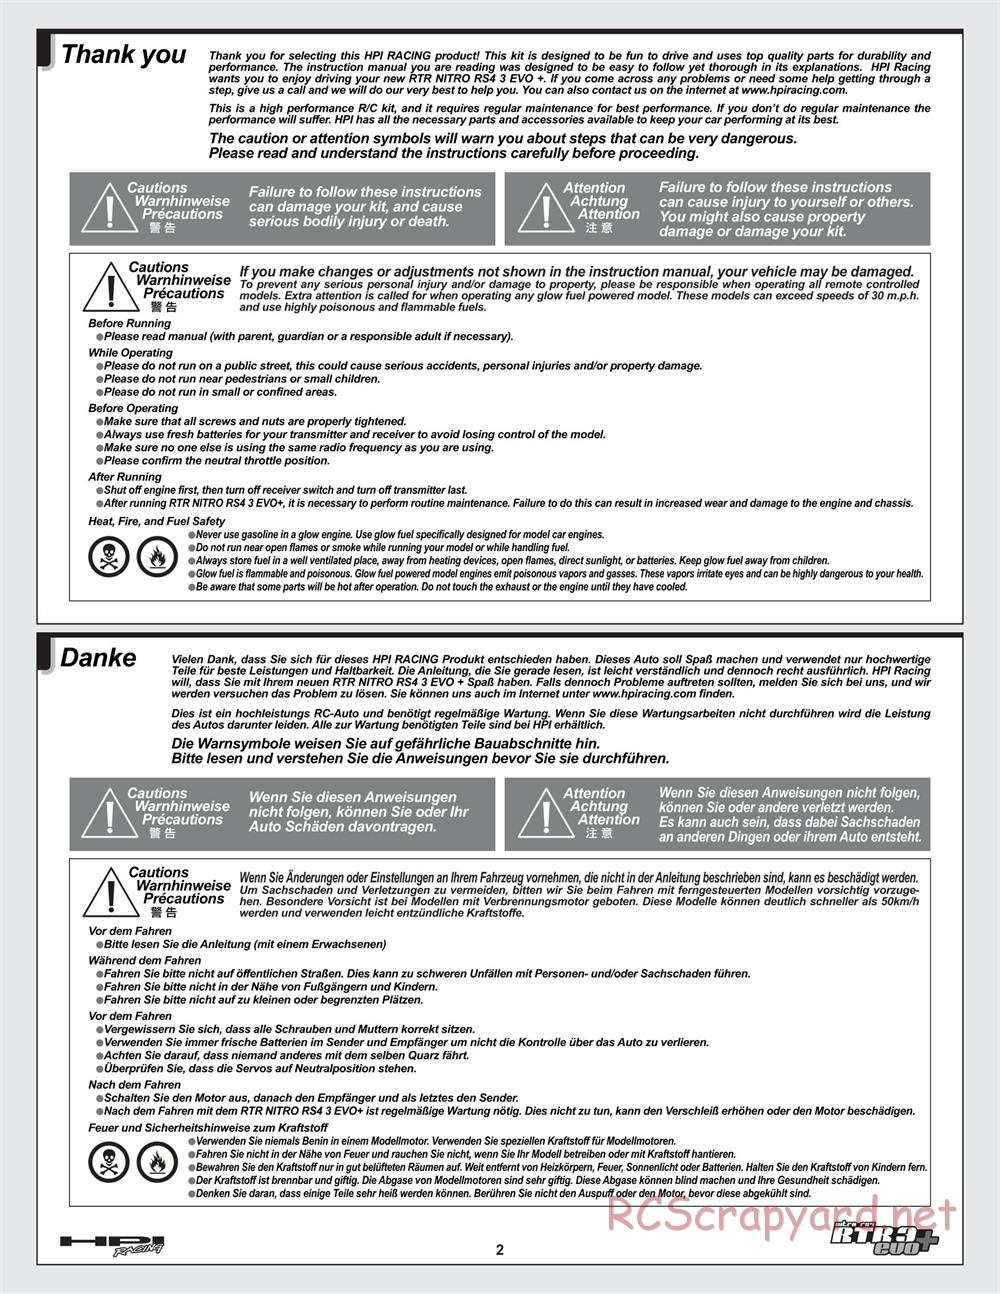 HPI - Nitro RS4 3 Evo+ - Manual - Page 2